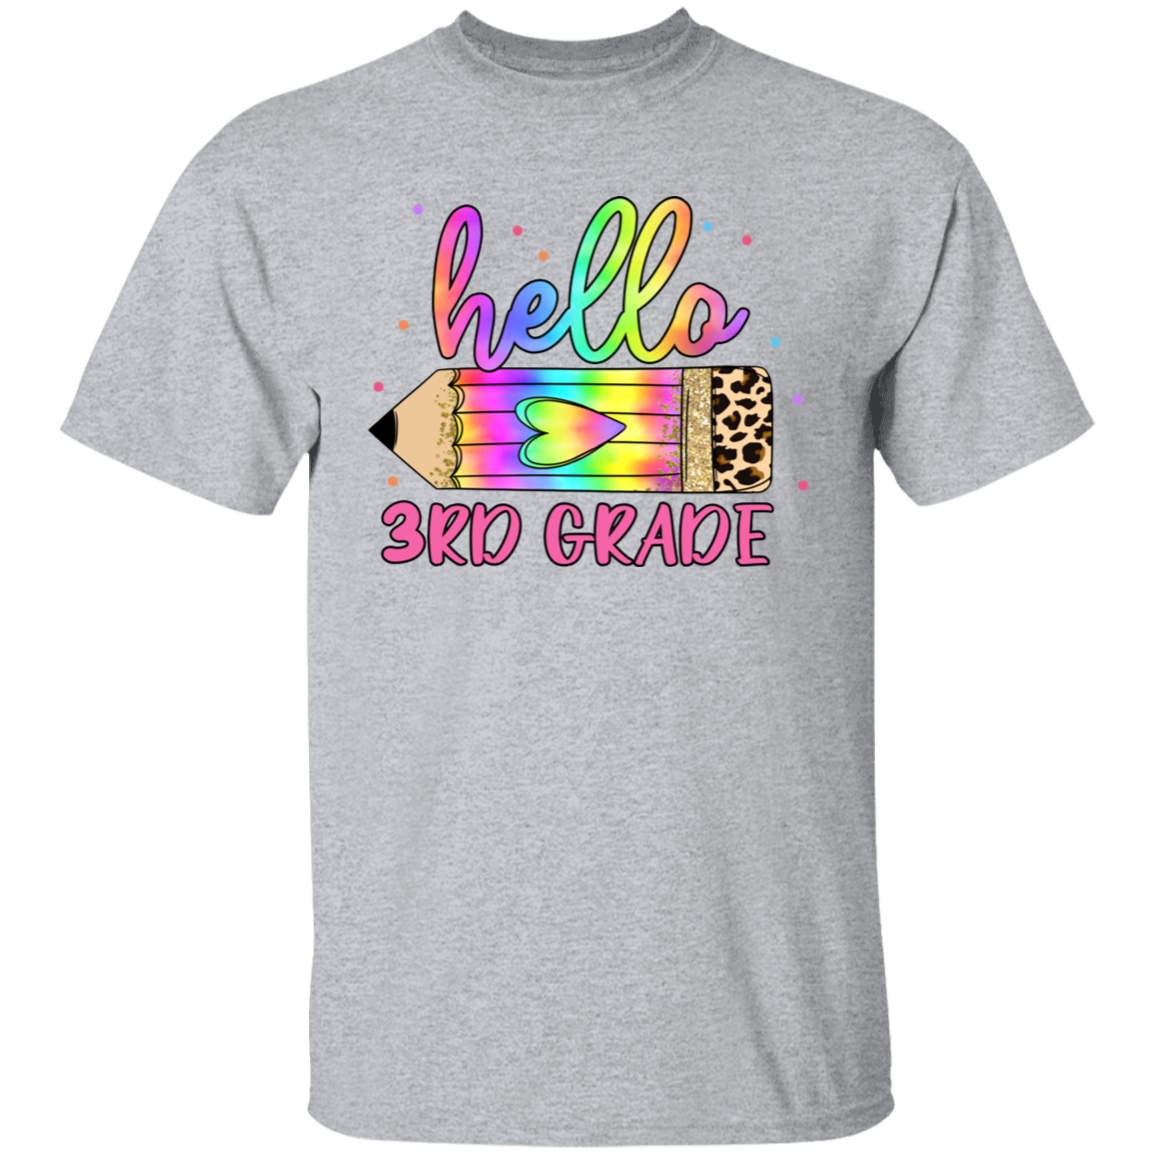 3rd Grade Youth 5.3 oz 100% Cotton T-Shirt